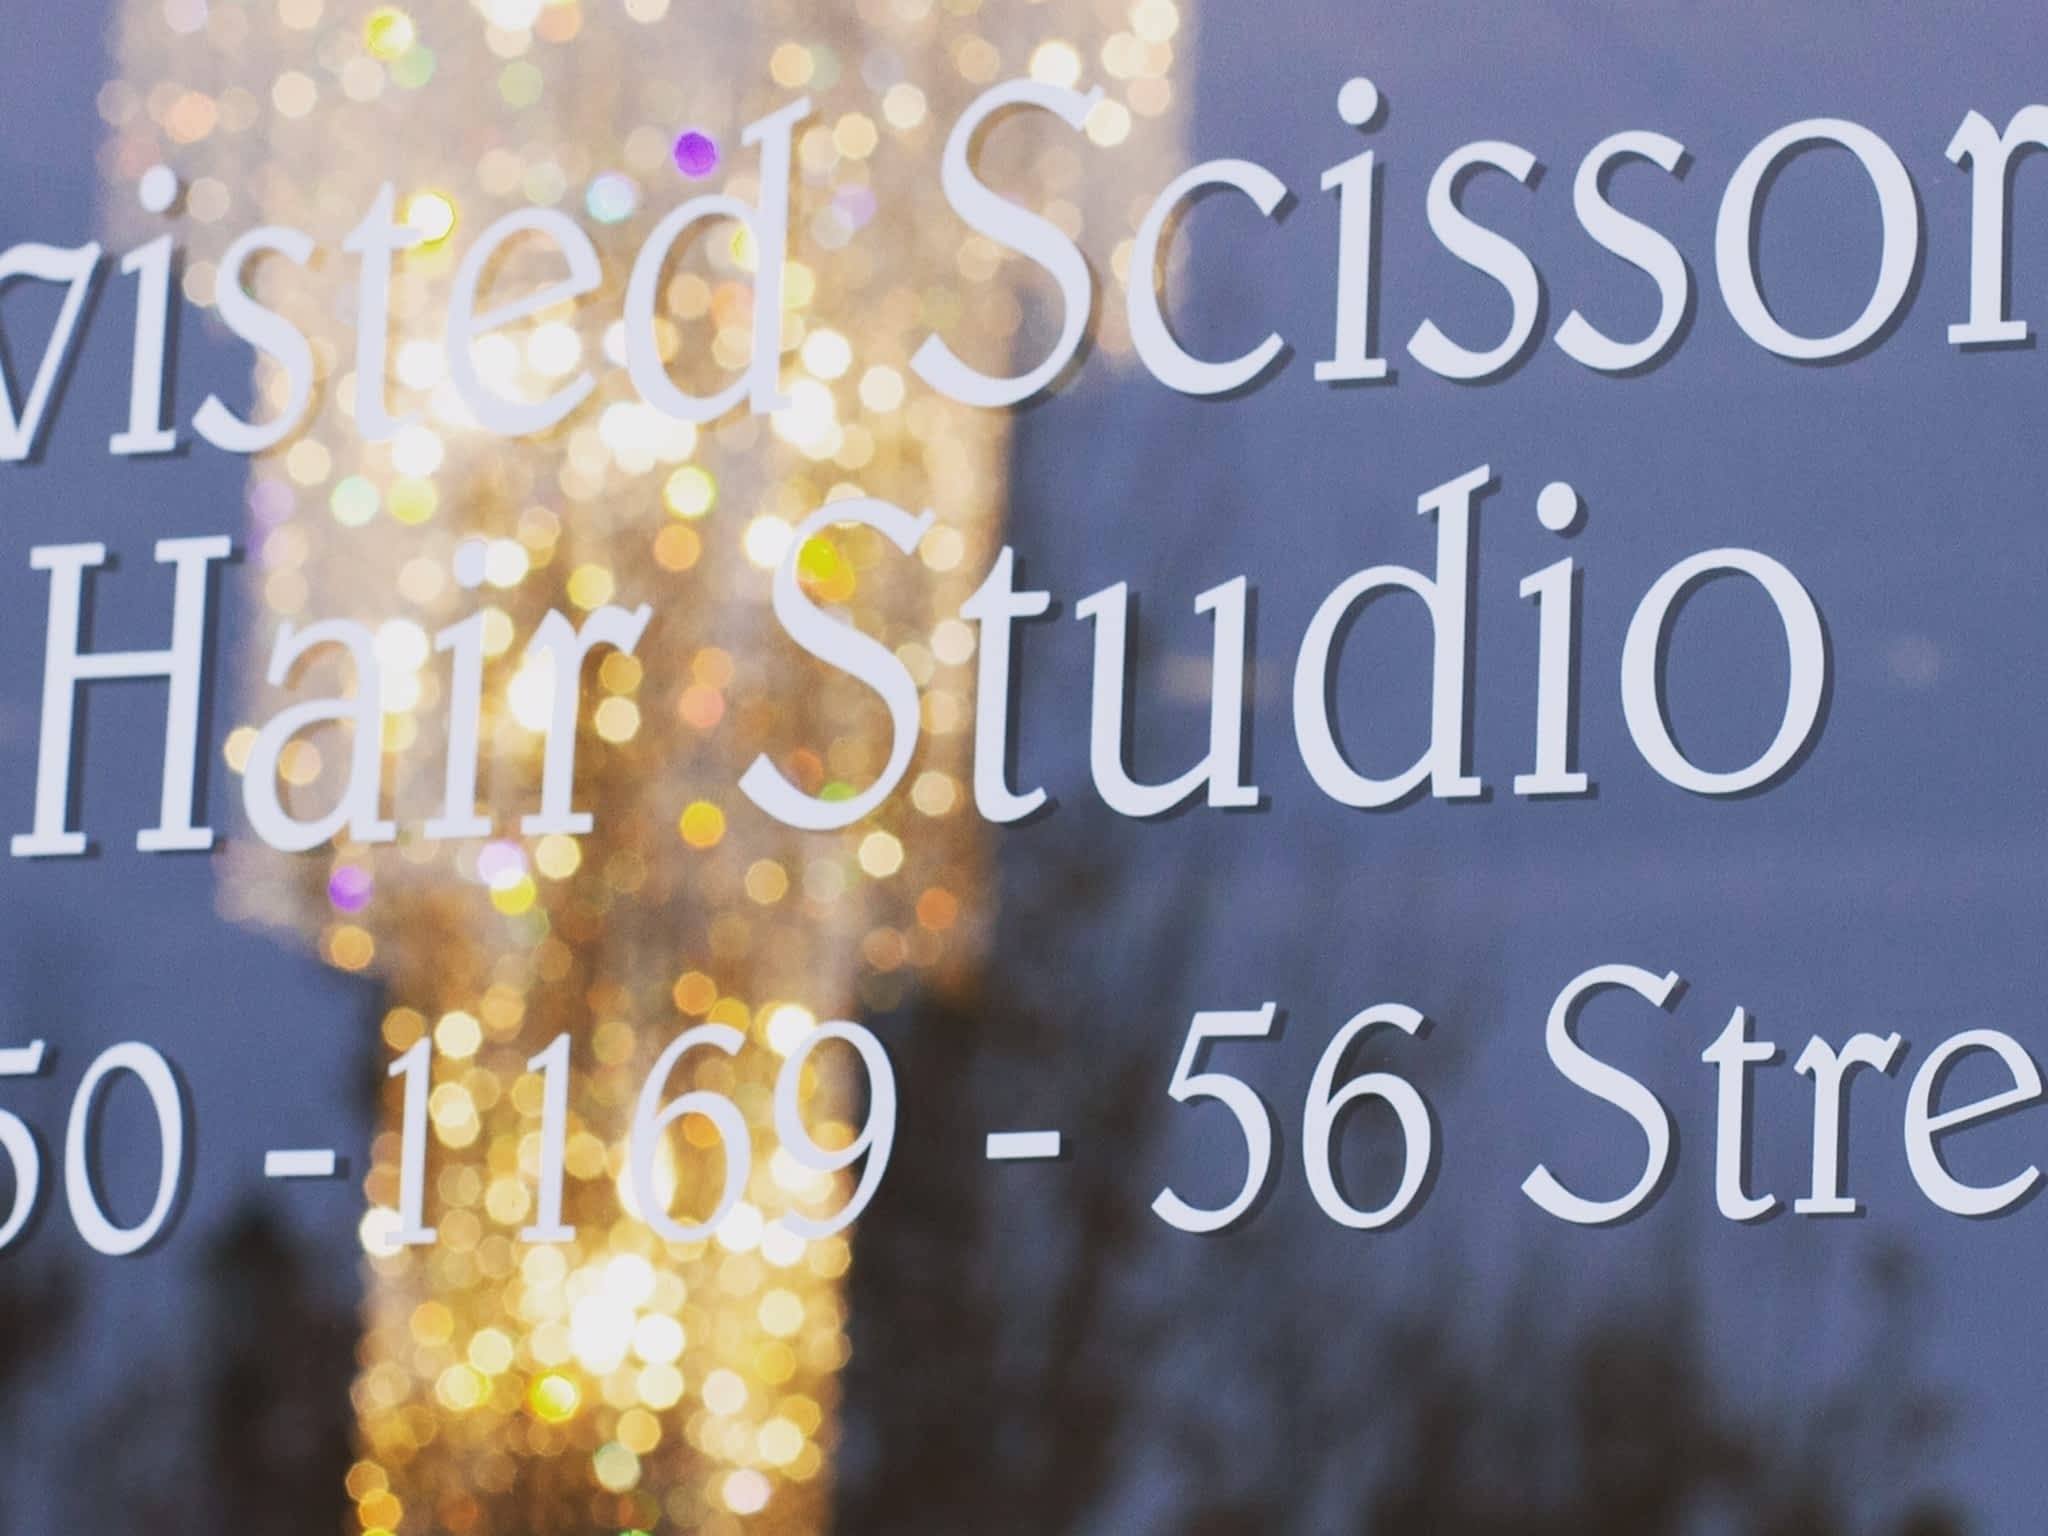 photo Twisted Scissors Hair Studio